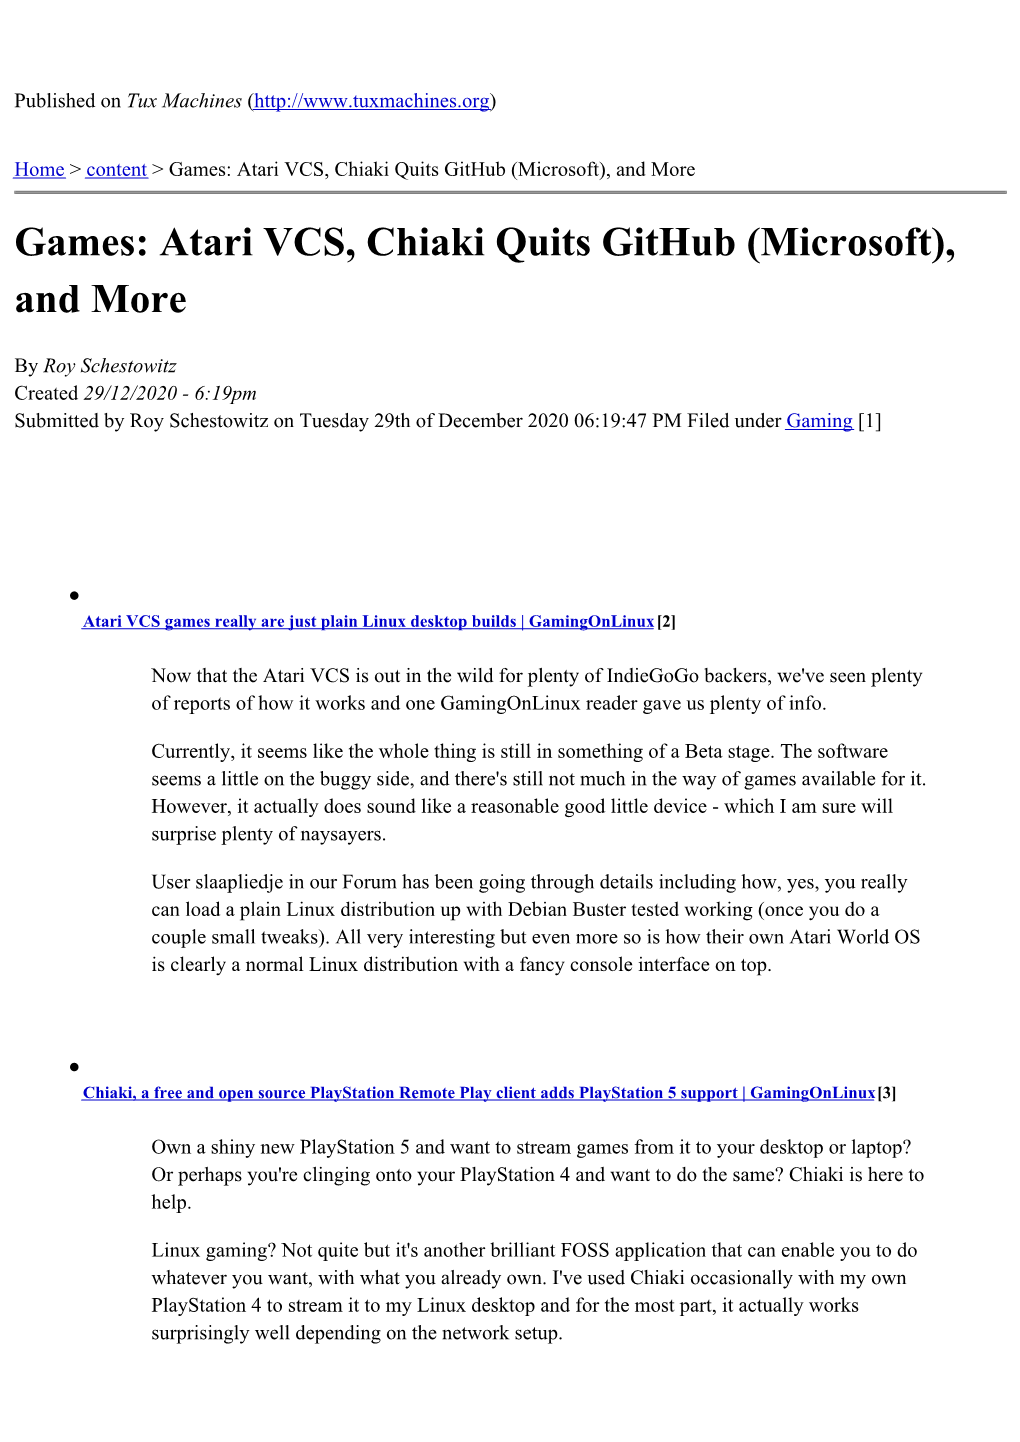 Games: Atari VCS, Chiaki Quits Github (Microsoft), and More